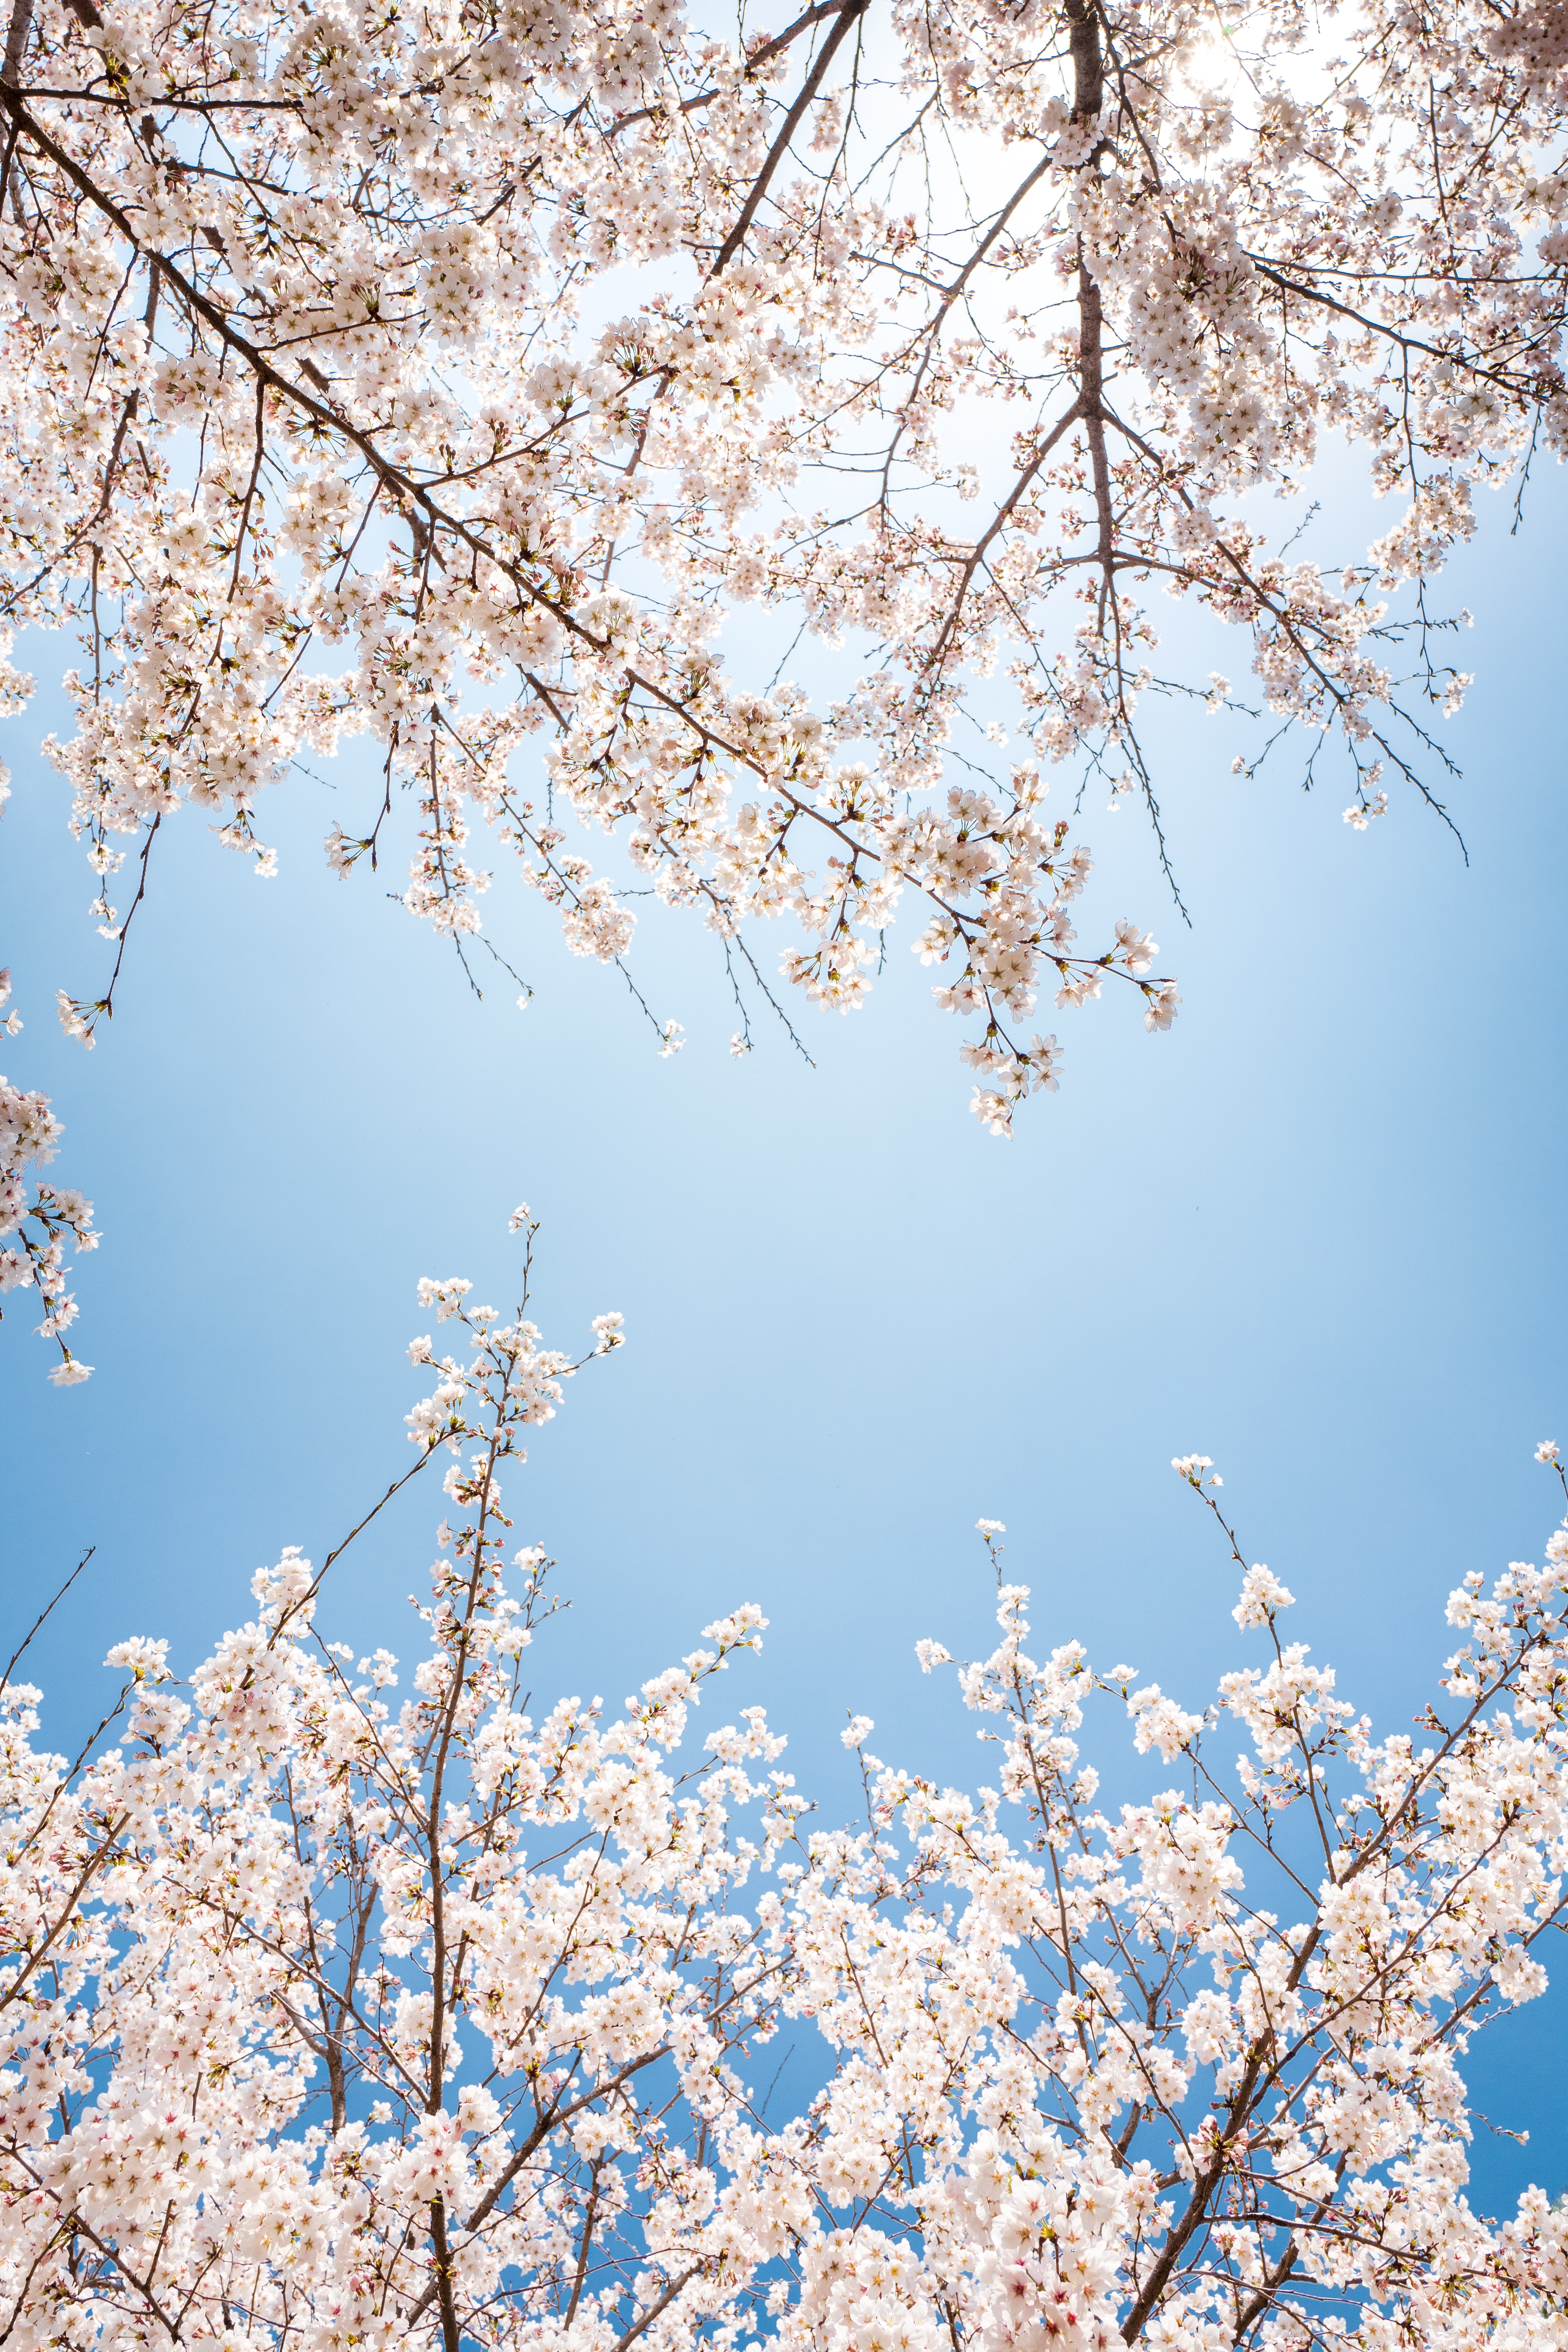 59651 descargar imagen flores, cielo, florecer, floración, rama: fondos de pantalla y protectores de pantalla gratis